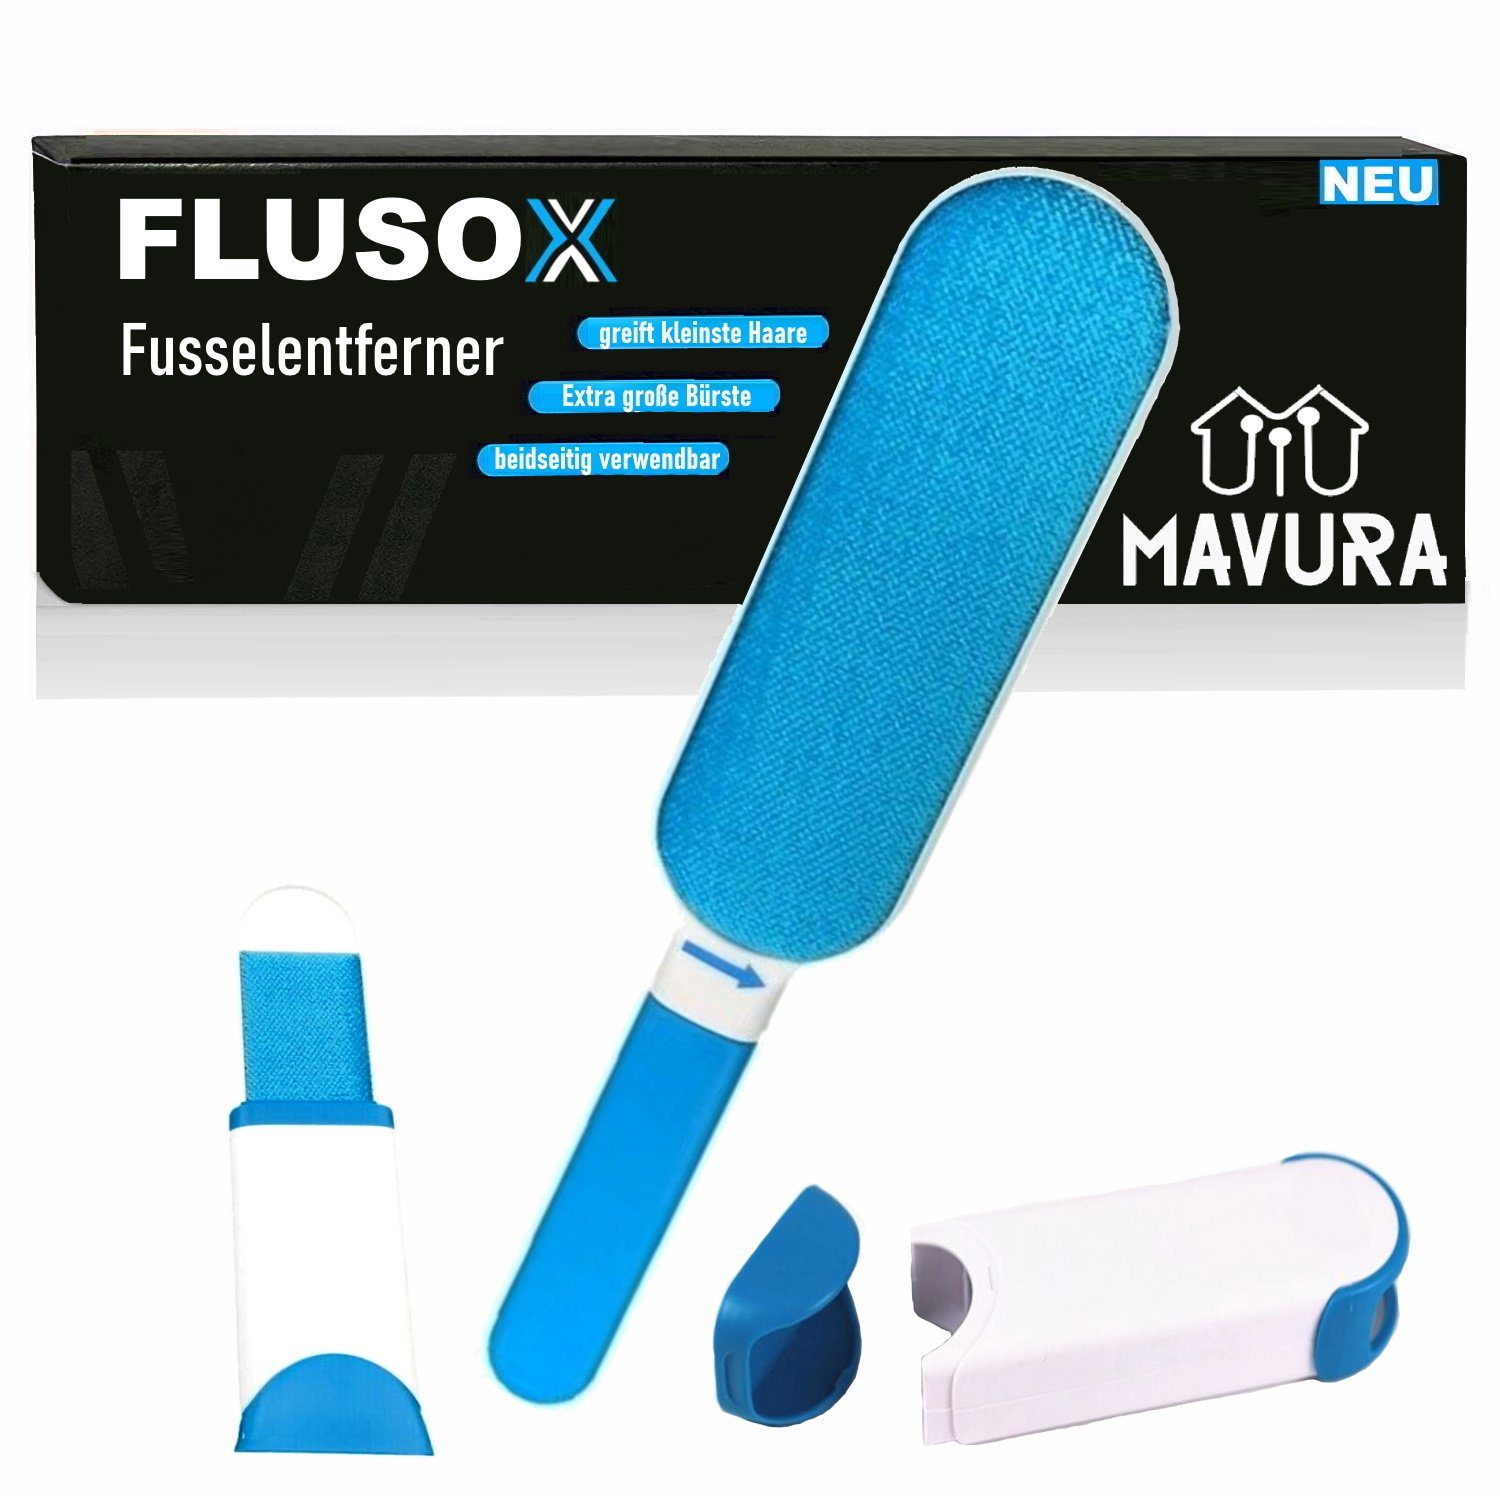 MAVURA Fusselbürste FLUSOX Mini Haarentferner inkl. Fusselentferner Fusselbürste FLUSOX Fussel Set Fusselroller, Flusenentferner Flusenbürste